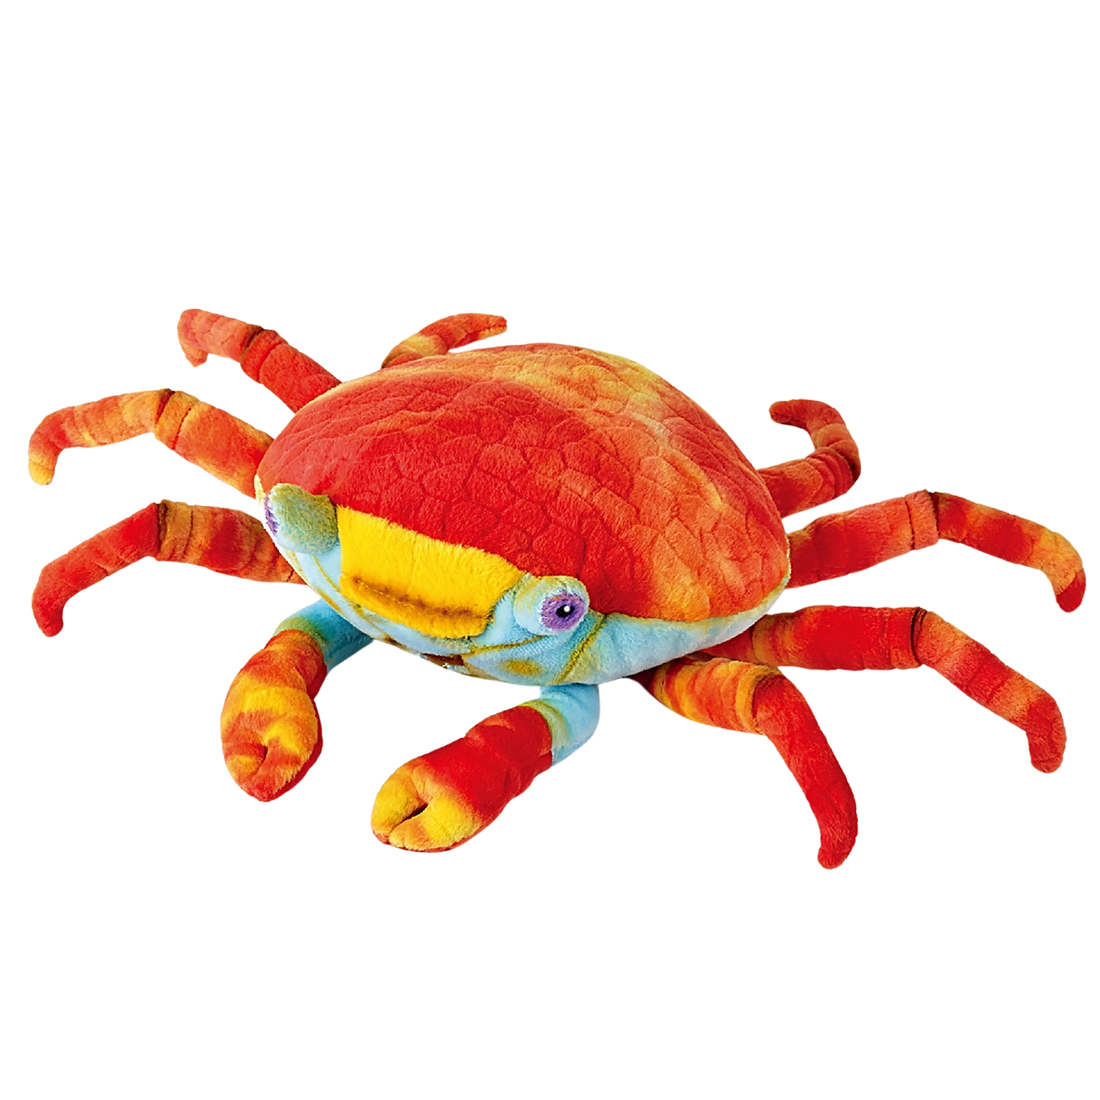 Exotic Crab Plush Toy